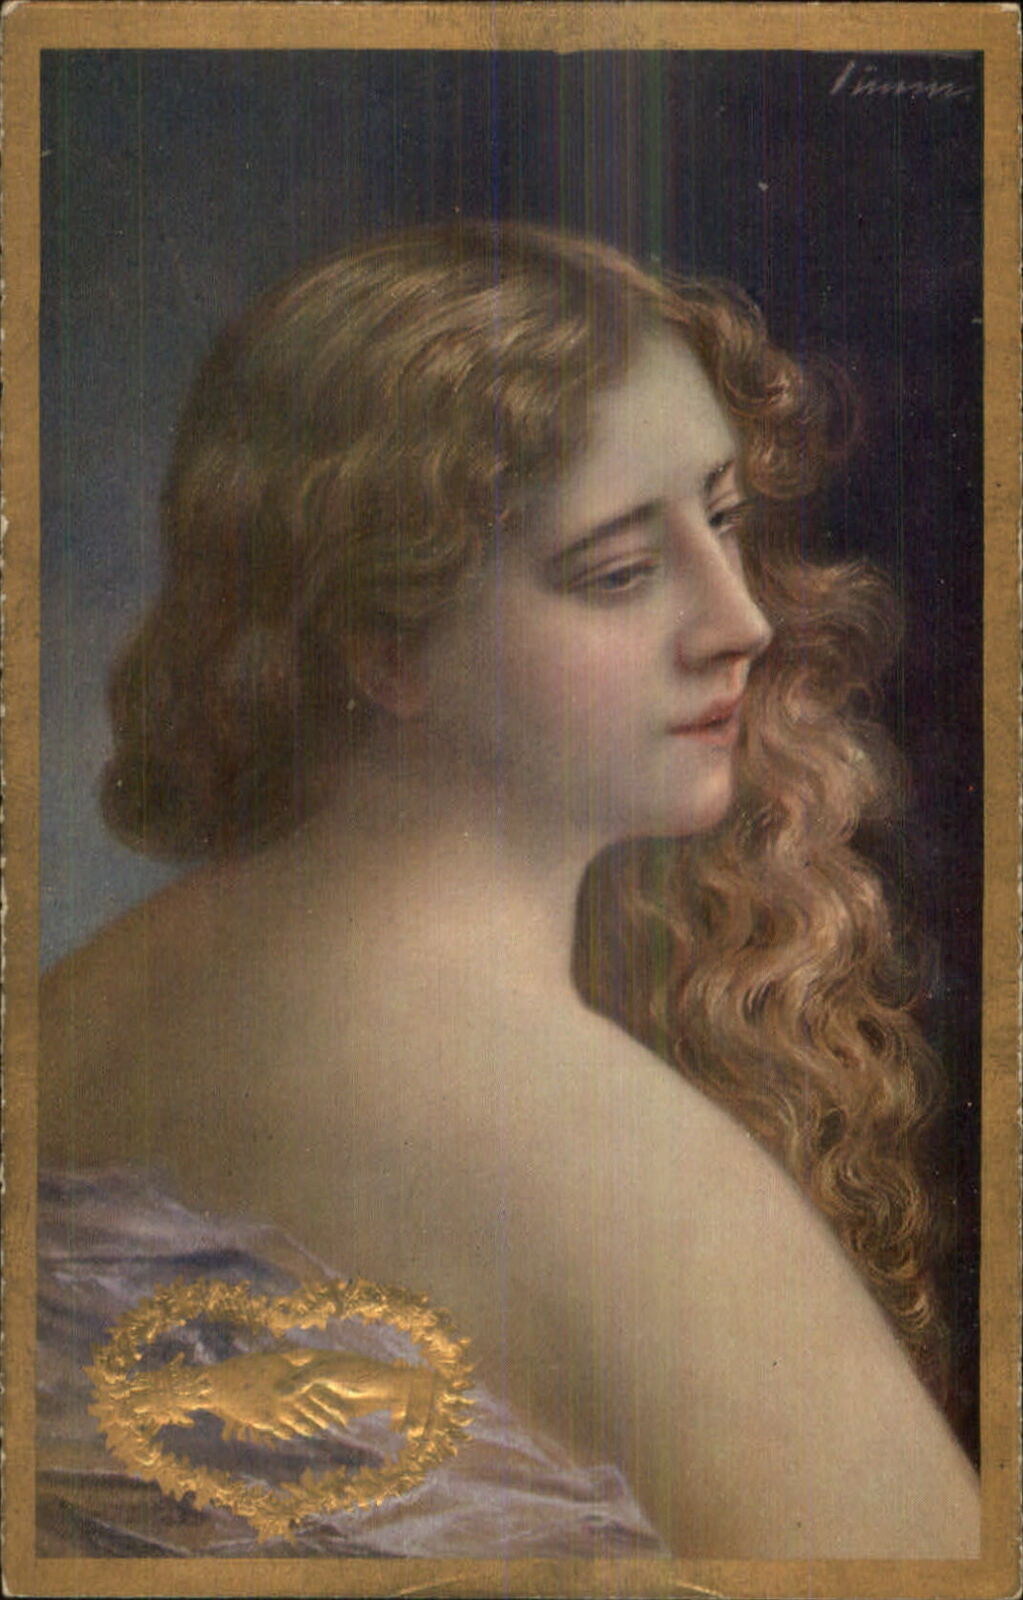 Beautiful Woman Wavy Hair Embossed Gold Hands Emblem Artist? c1910 PC #1